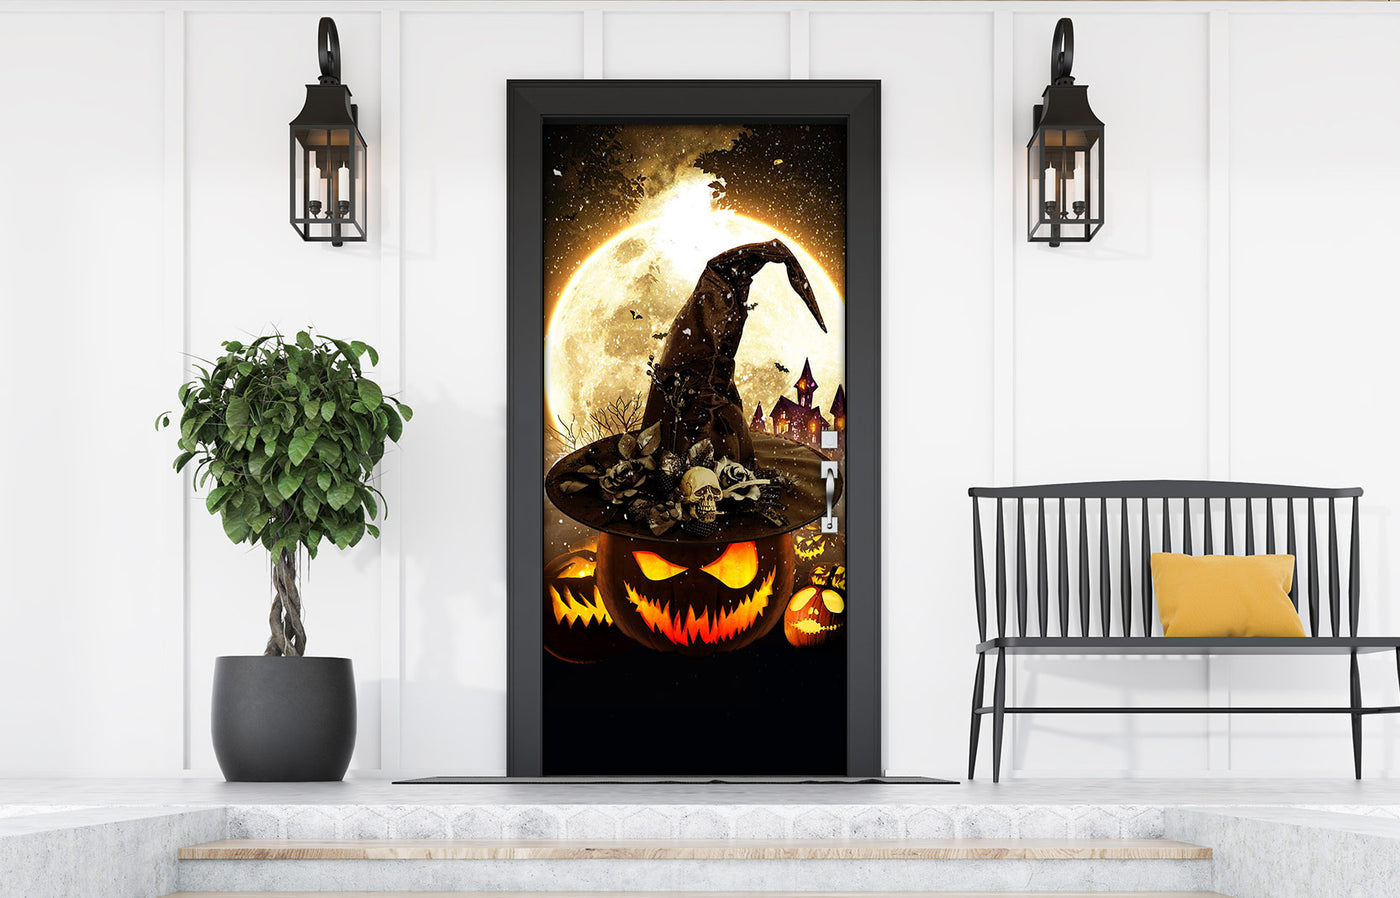 Witchy Pumpkin Front Door Cover Banner Wrap